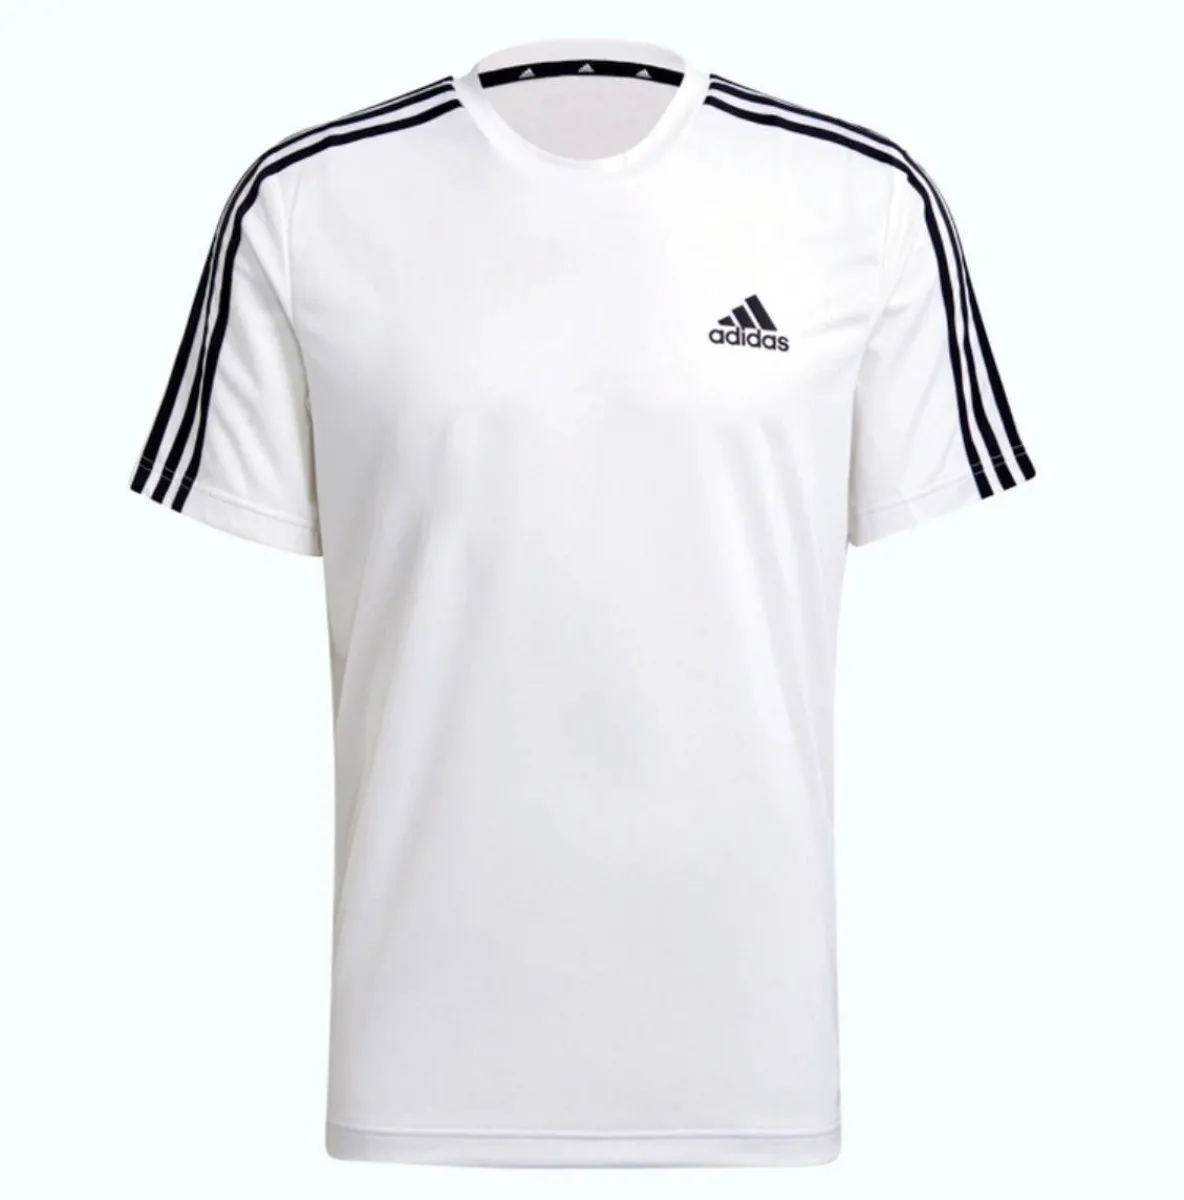 adidas T-Shirt 3S blanc